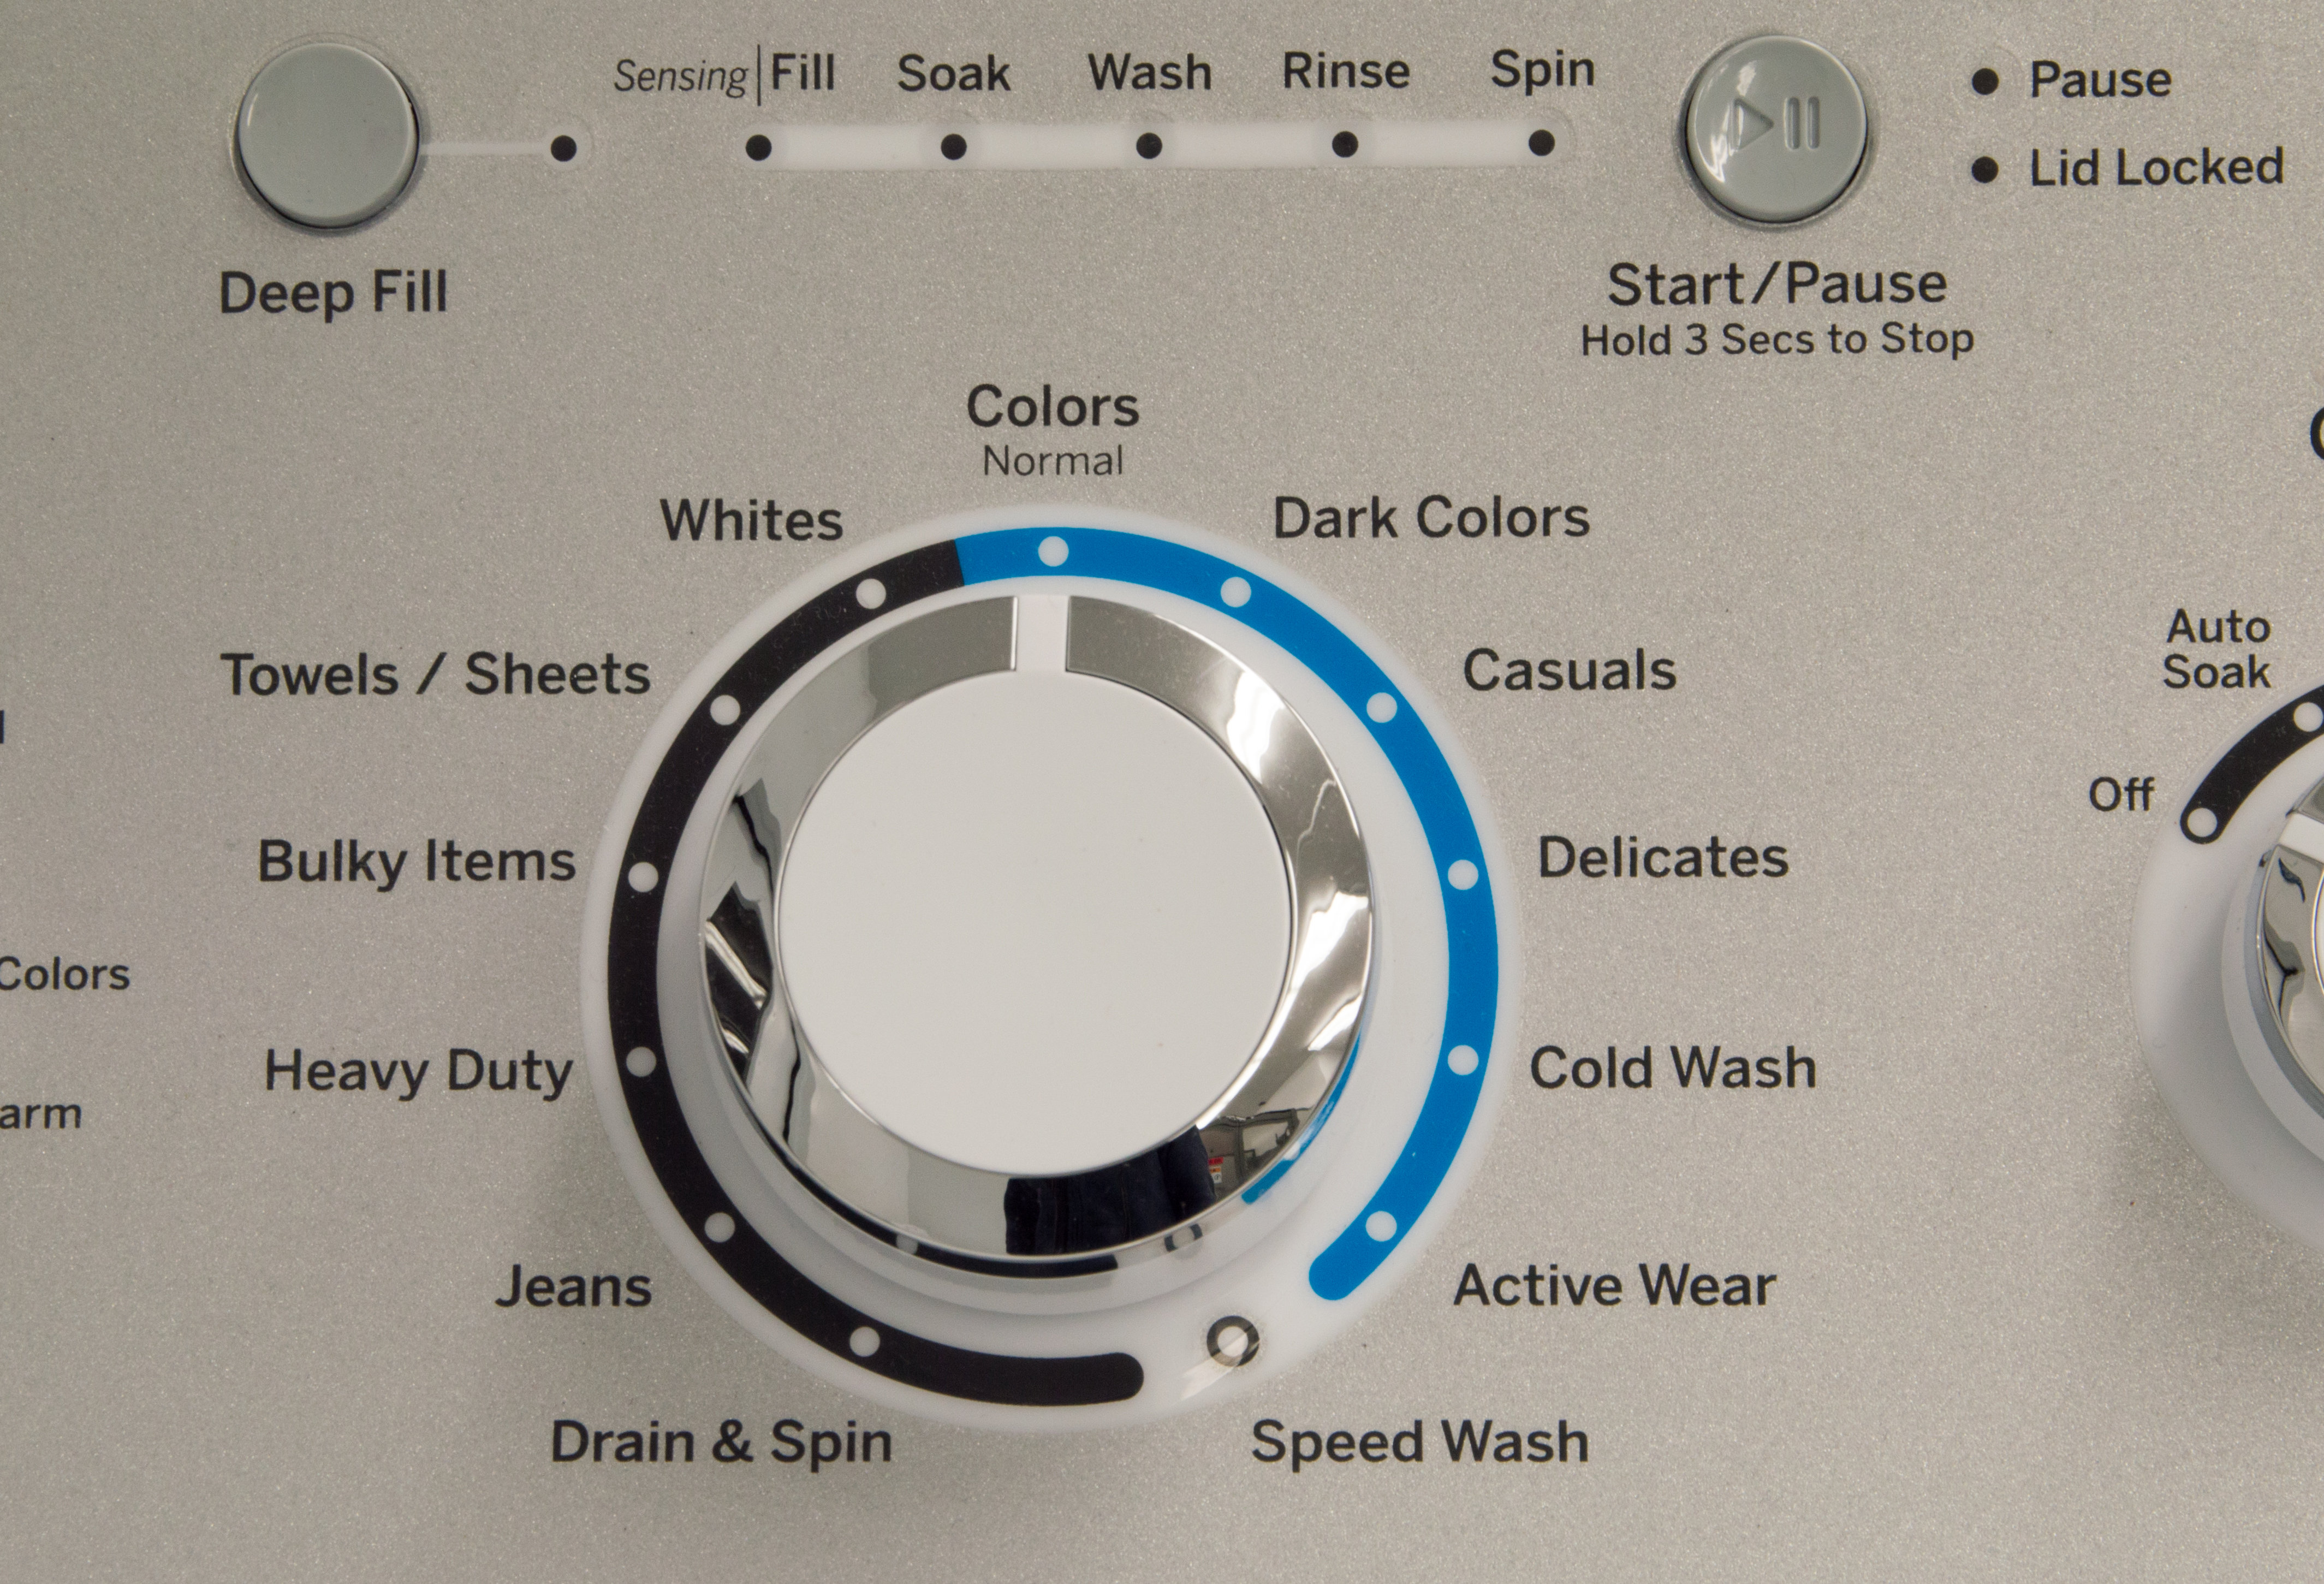 How do electronic washing machines work?